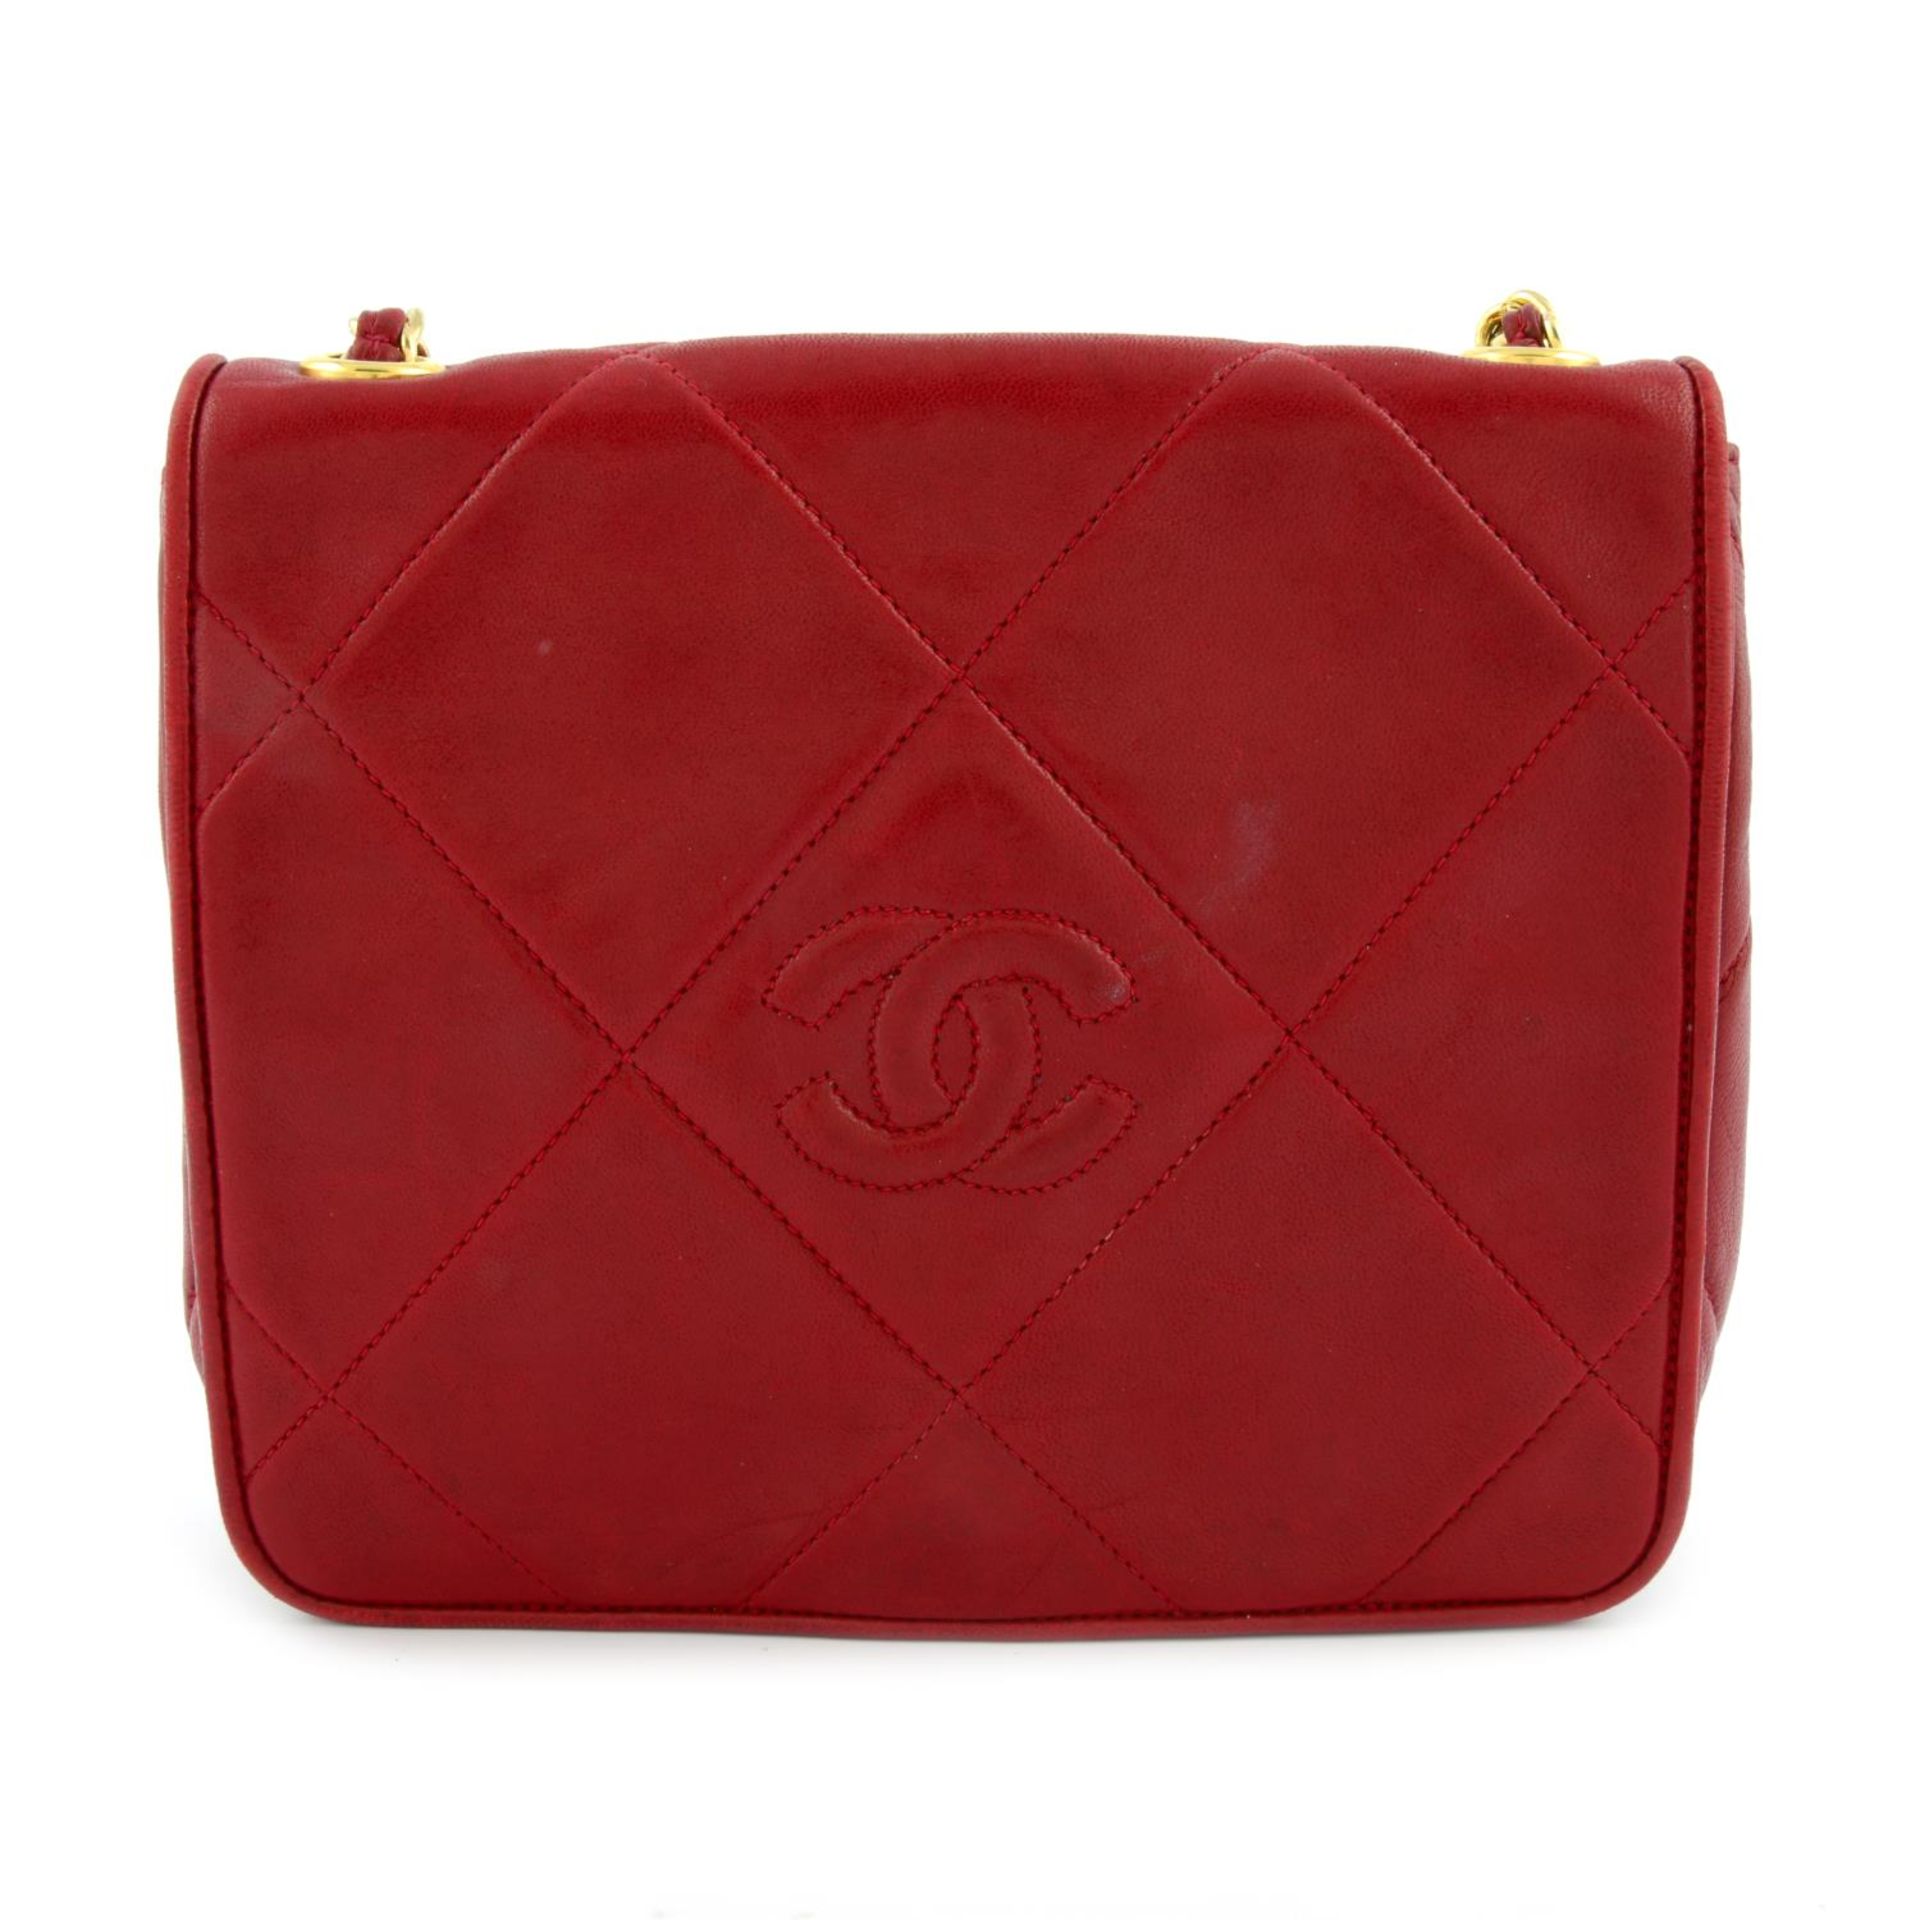 CHANEL - a red leather flap crossbody handbag.